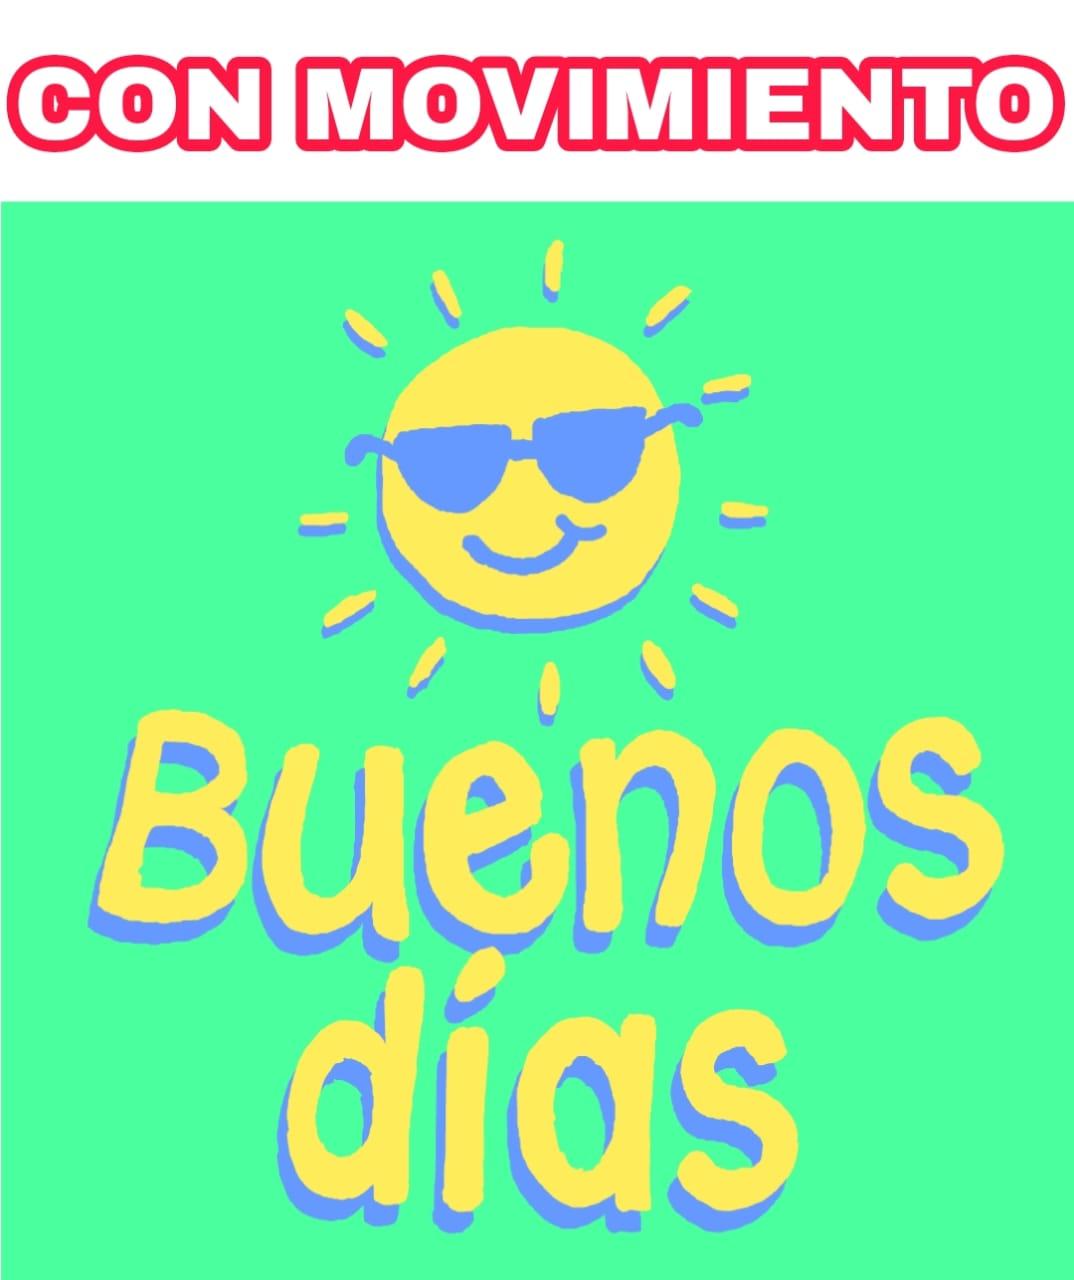 Buenos dias sticker movimiento APK for Android Download